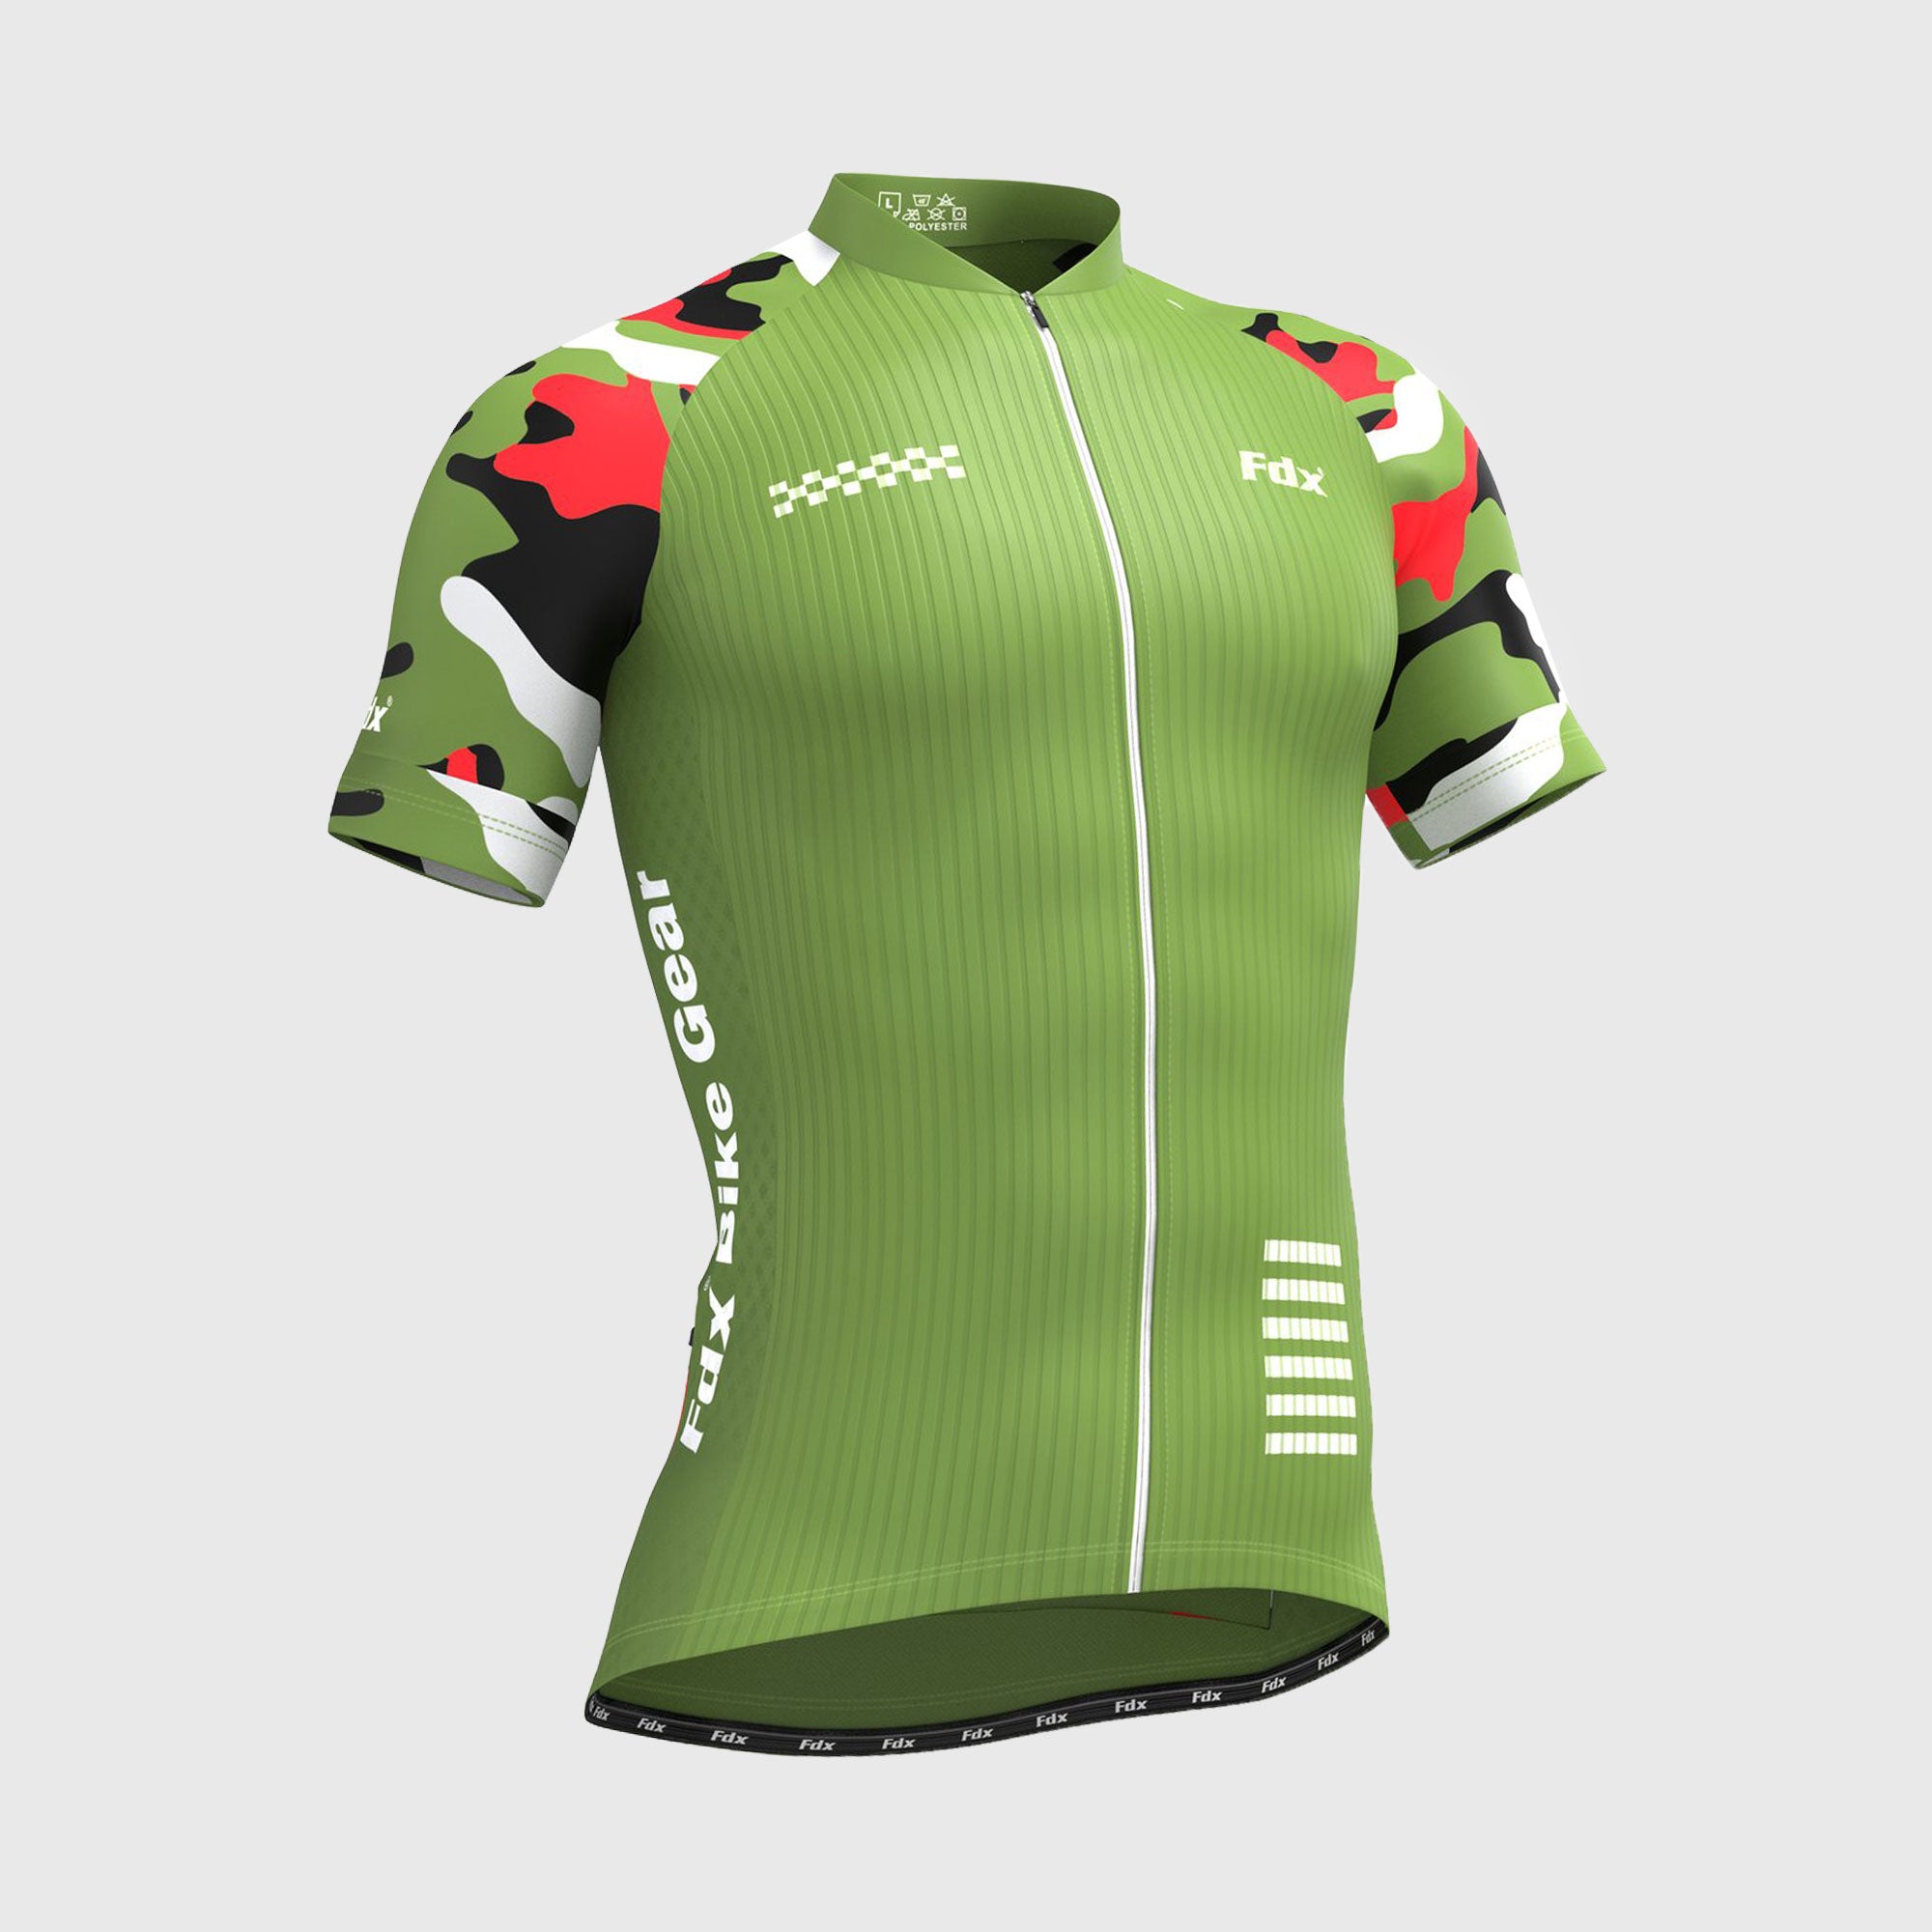 Fdx Men's Green Camo Short Sleeve Cycling Jersey Best Summer Road Bike Wear Light Weight, Hi-viz Reflectors & Pockets - Camouflage